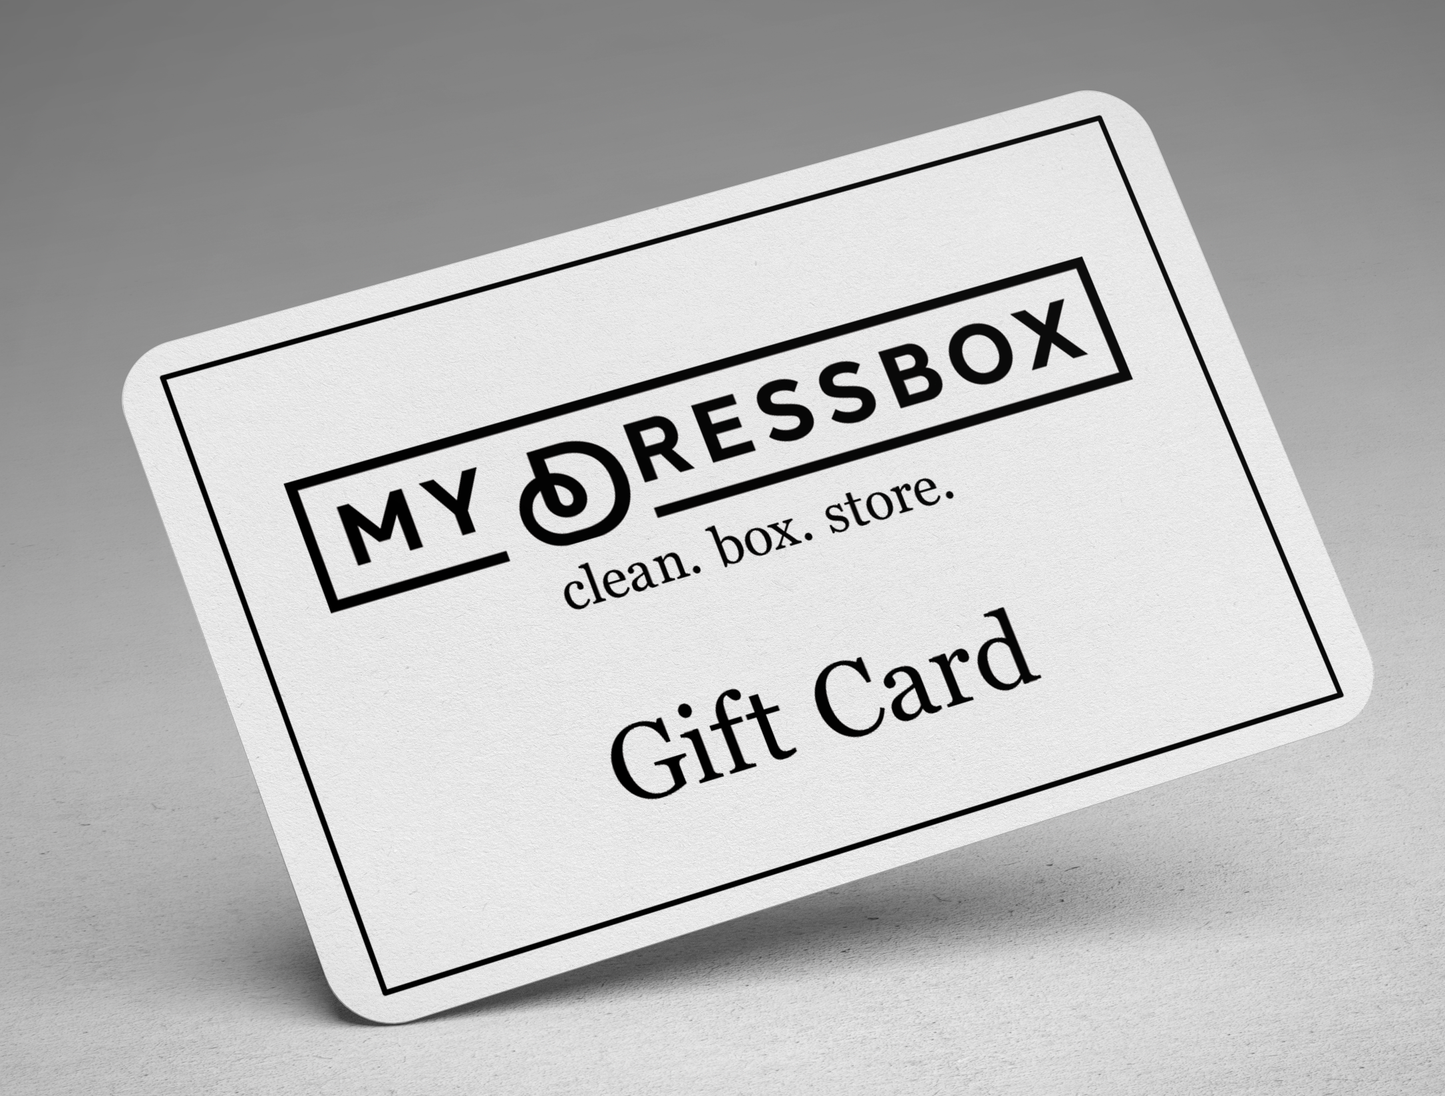 MyDressbox Gift Cards